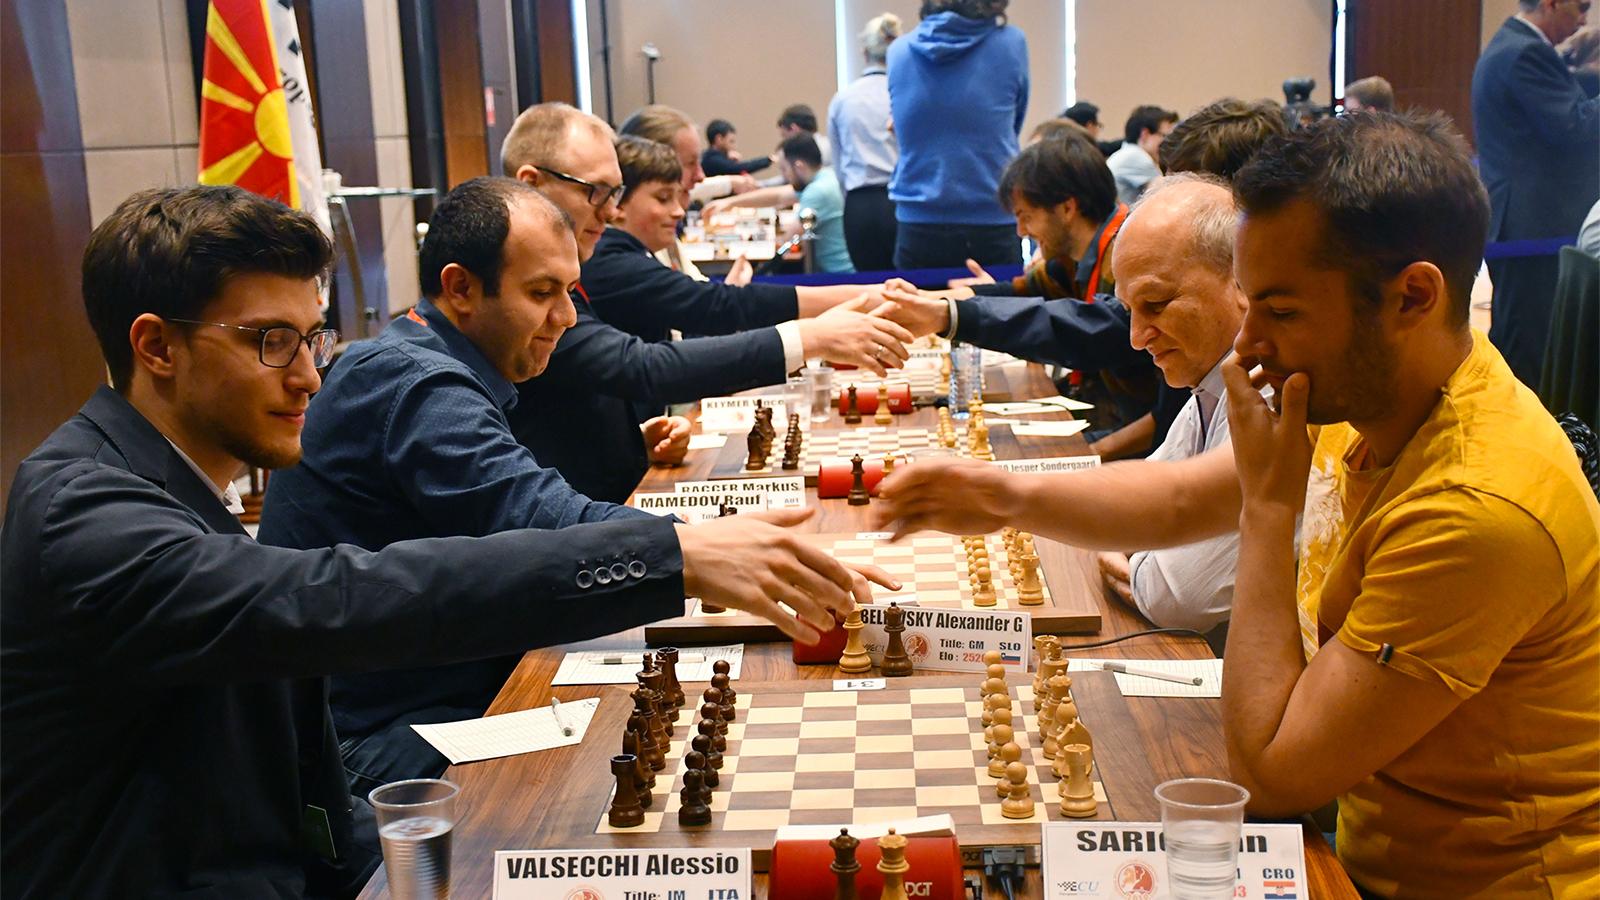 EUROPEAN ONLINE AMATEUR CHESS CHAMPIONSHIP – GROUP B RESULTS – European  Chess Union